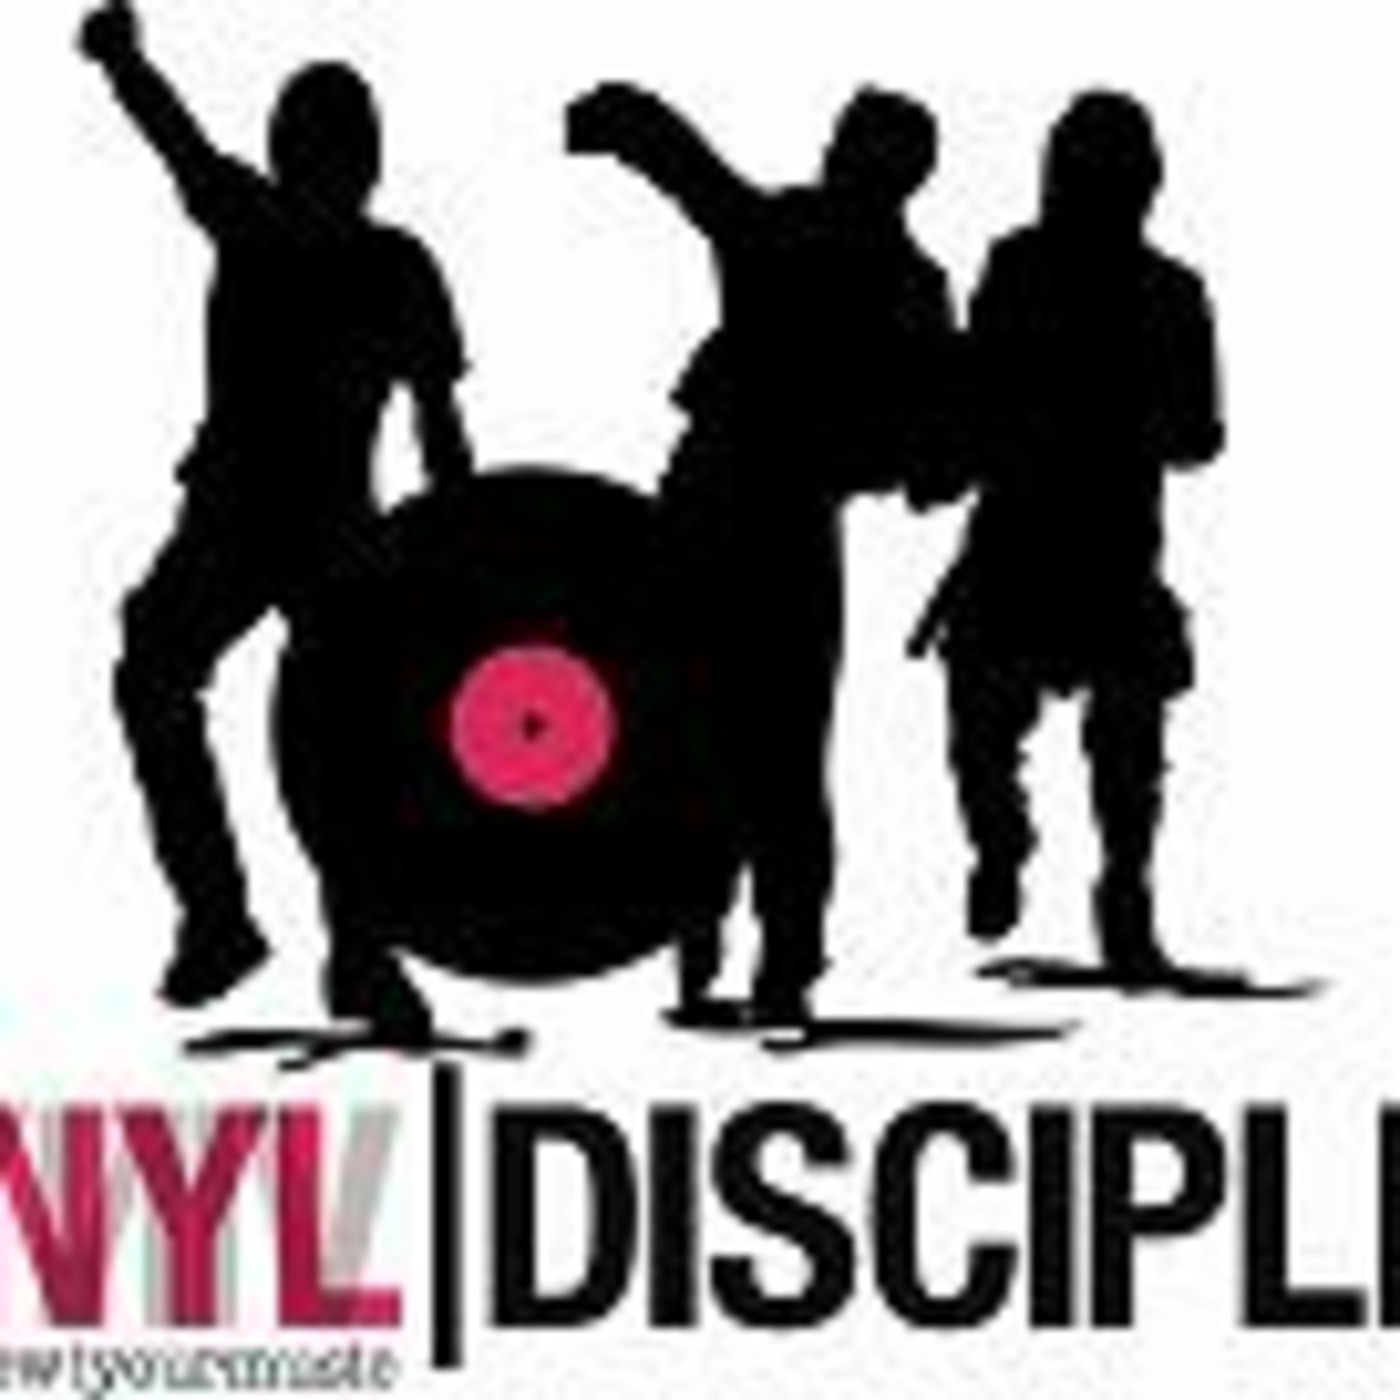 Vinyl Disciples: CHEW YOUR MUSIC!